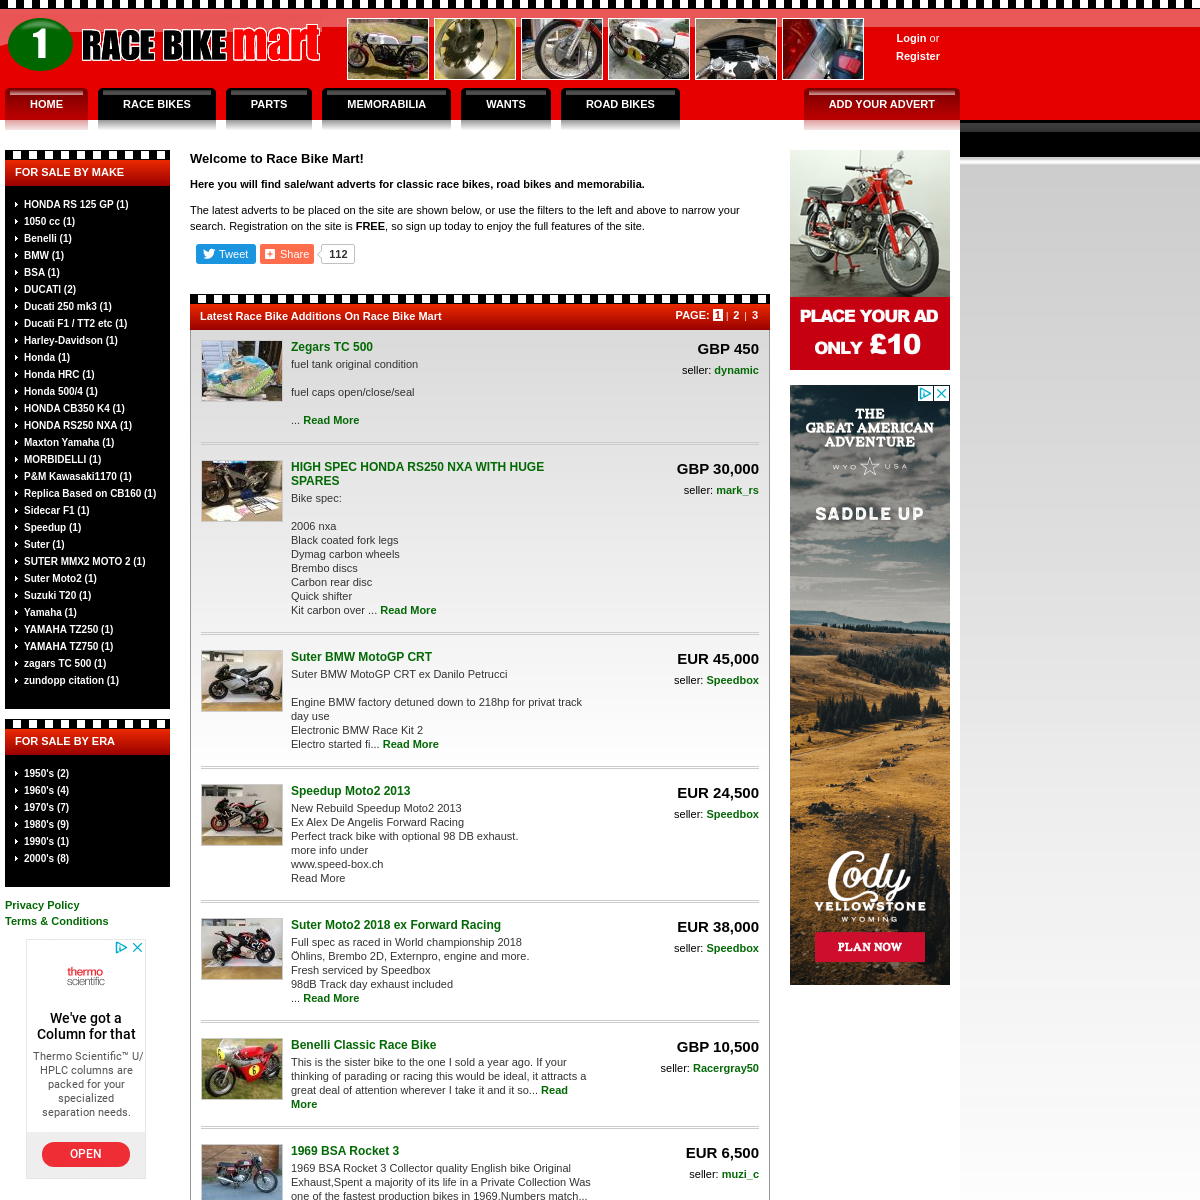 A complete backup of racebikemart.com